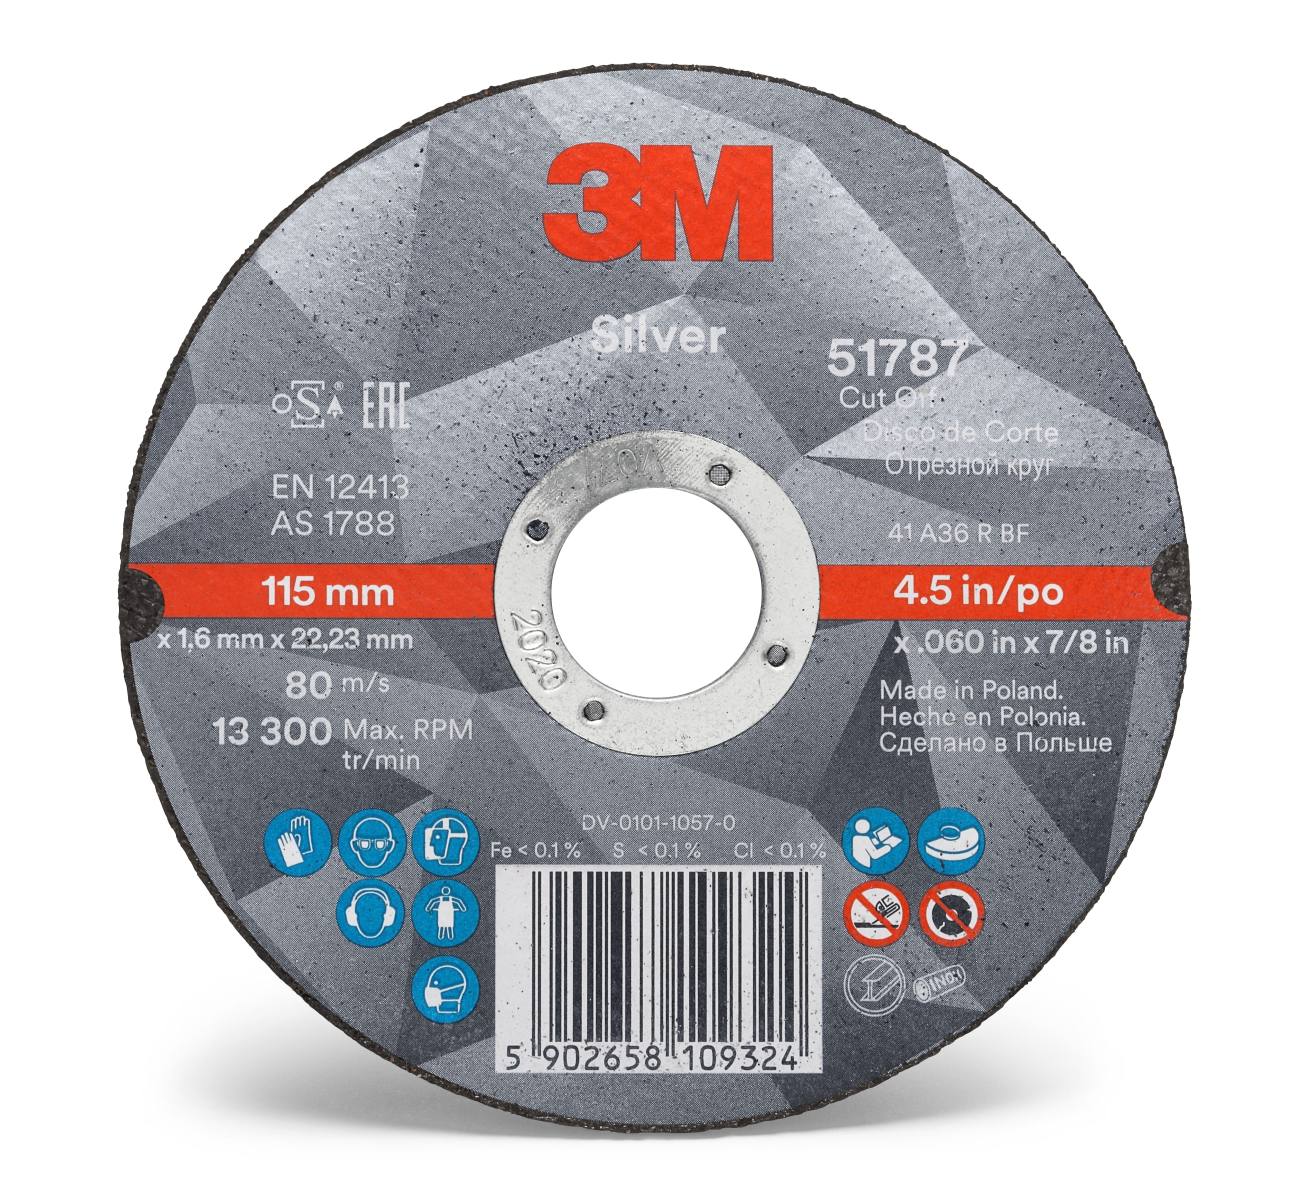 Disco de corte 3M Silver Cut-Off, 125 mm, 1,6 mm, 22,23 mm, T41, 51792